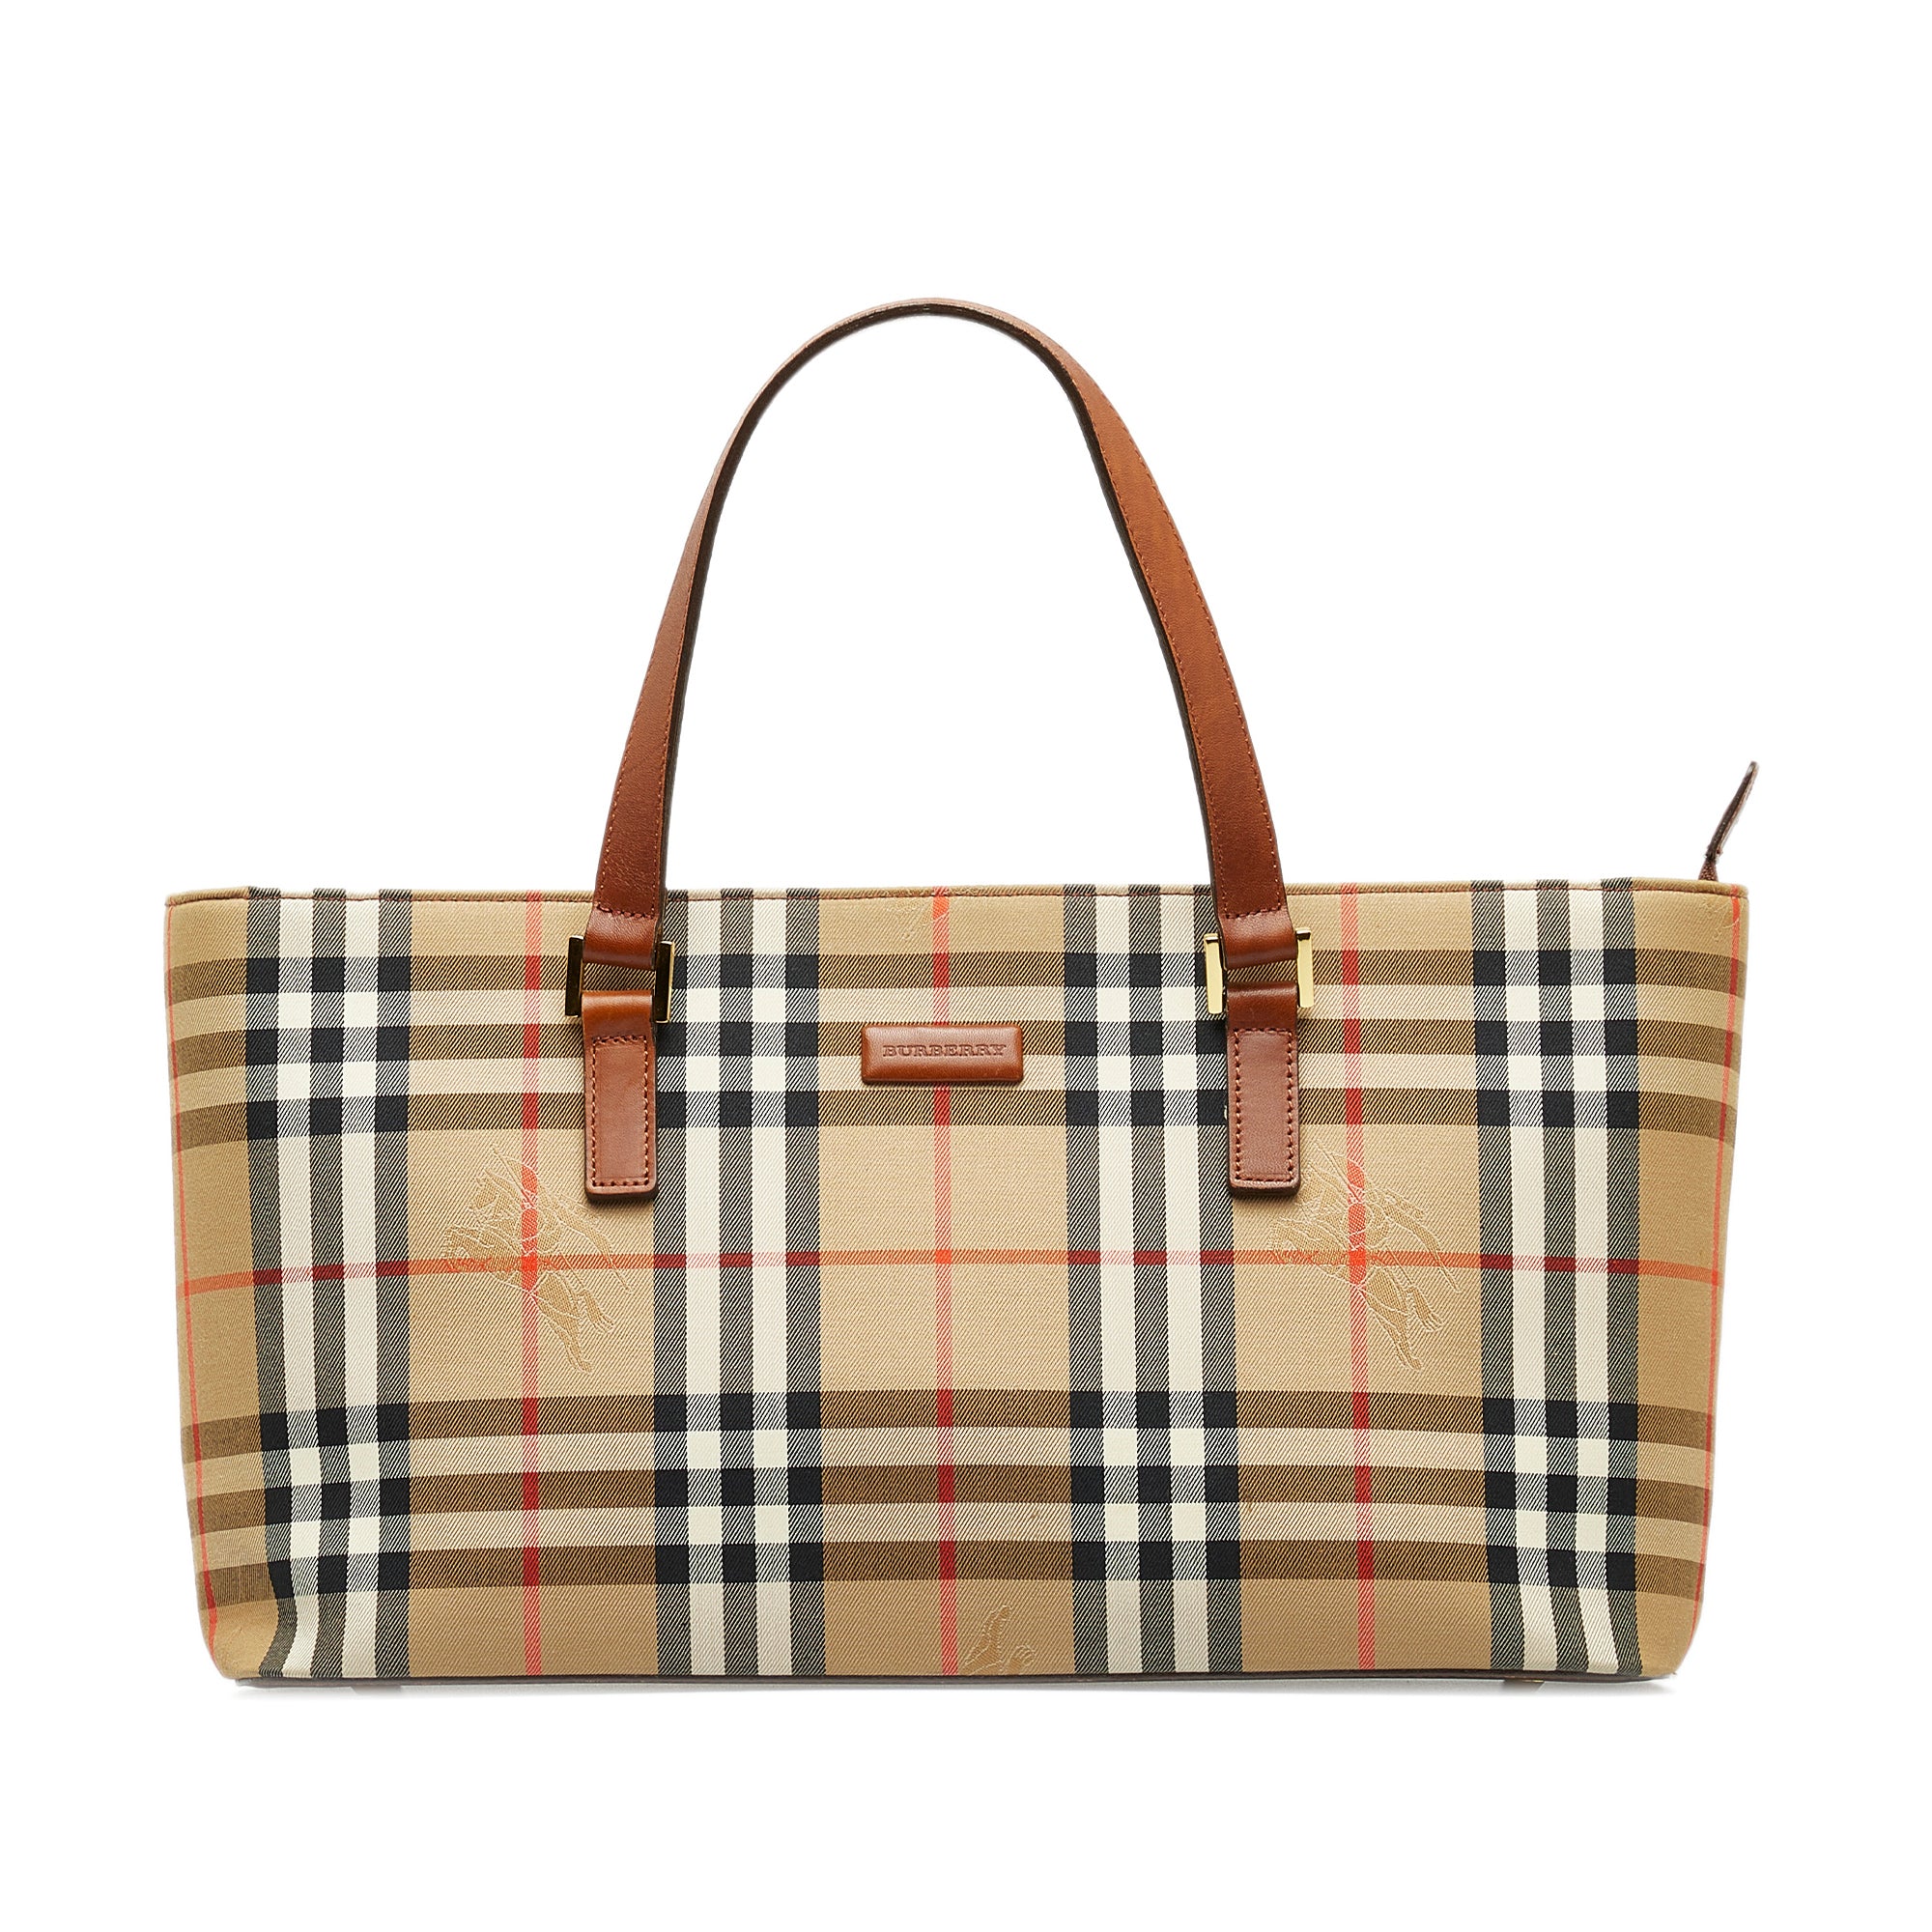 Burberrys Haymarket Speedy Bag - clothing & accessories - by owner